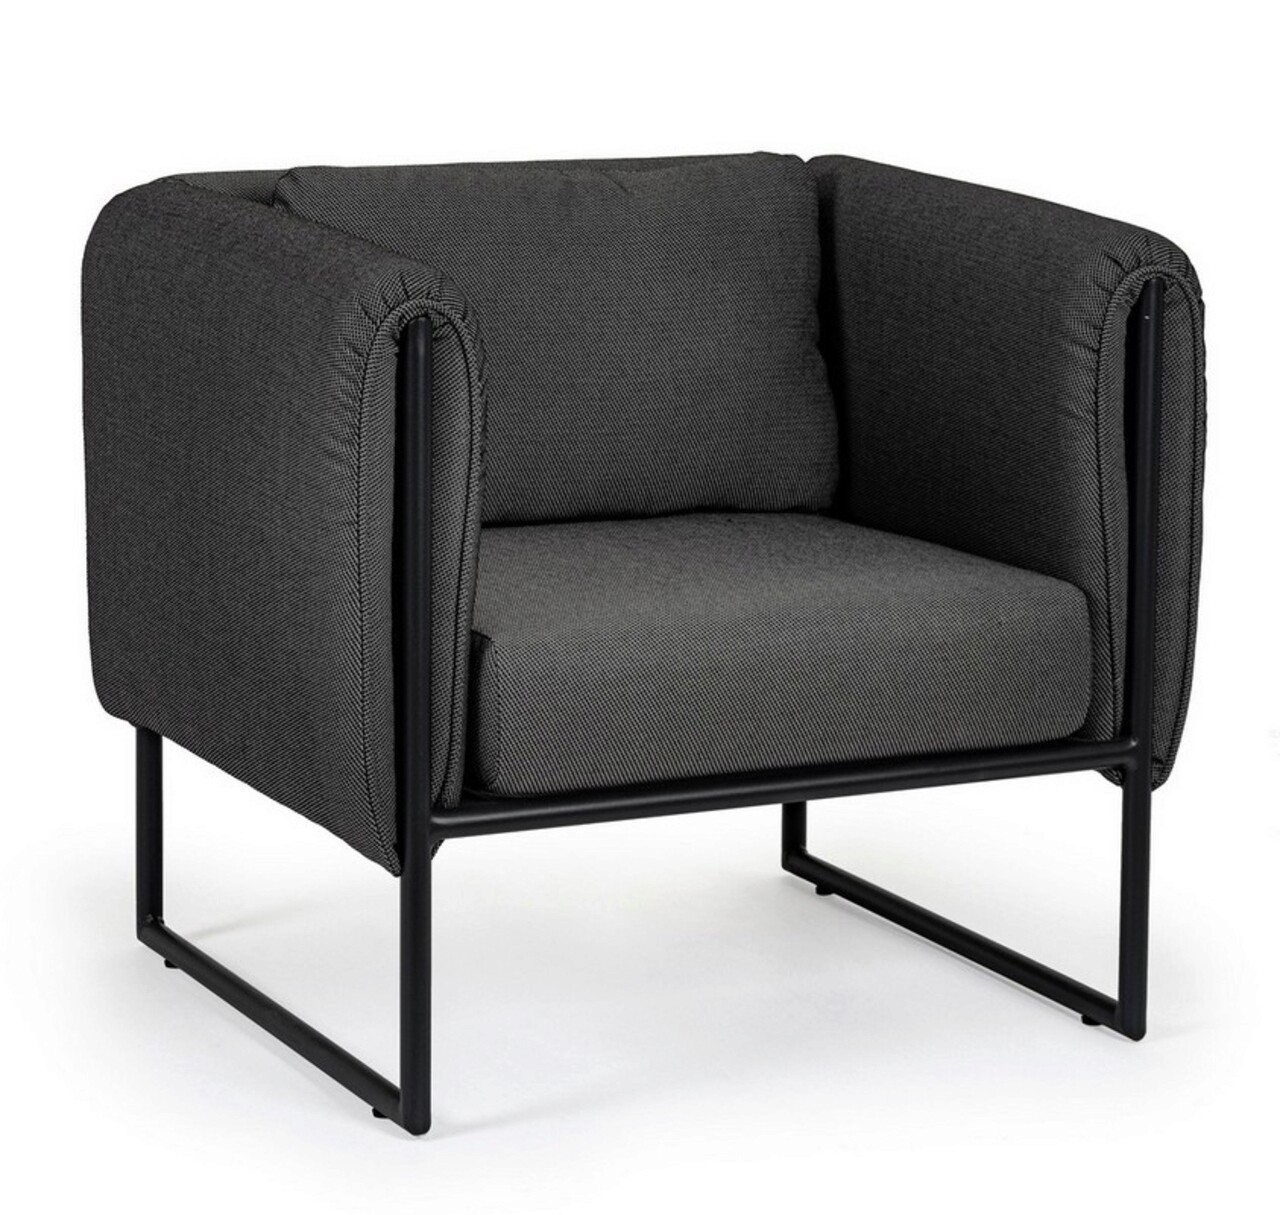 Pixel Kerti/terasz fotel, Bizzotto, 76 x 74 x 72 cm, alumínium/olefin szövés, szénacél